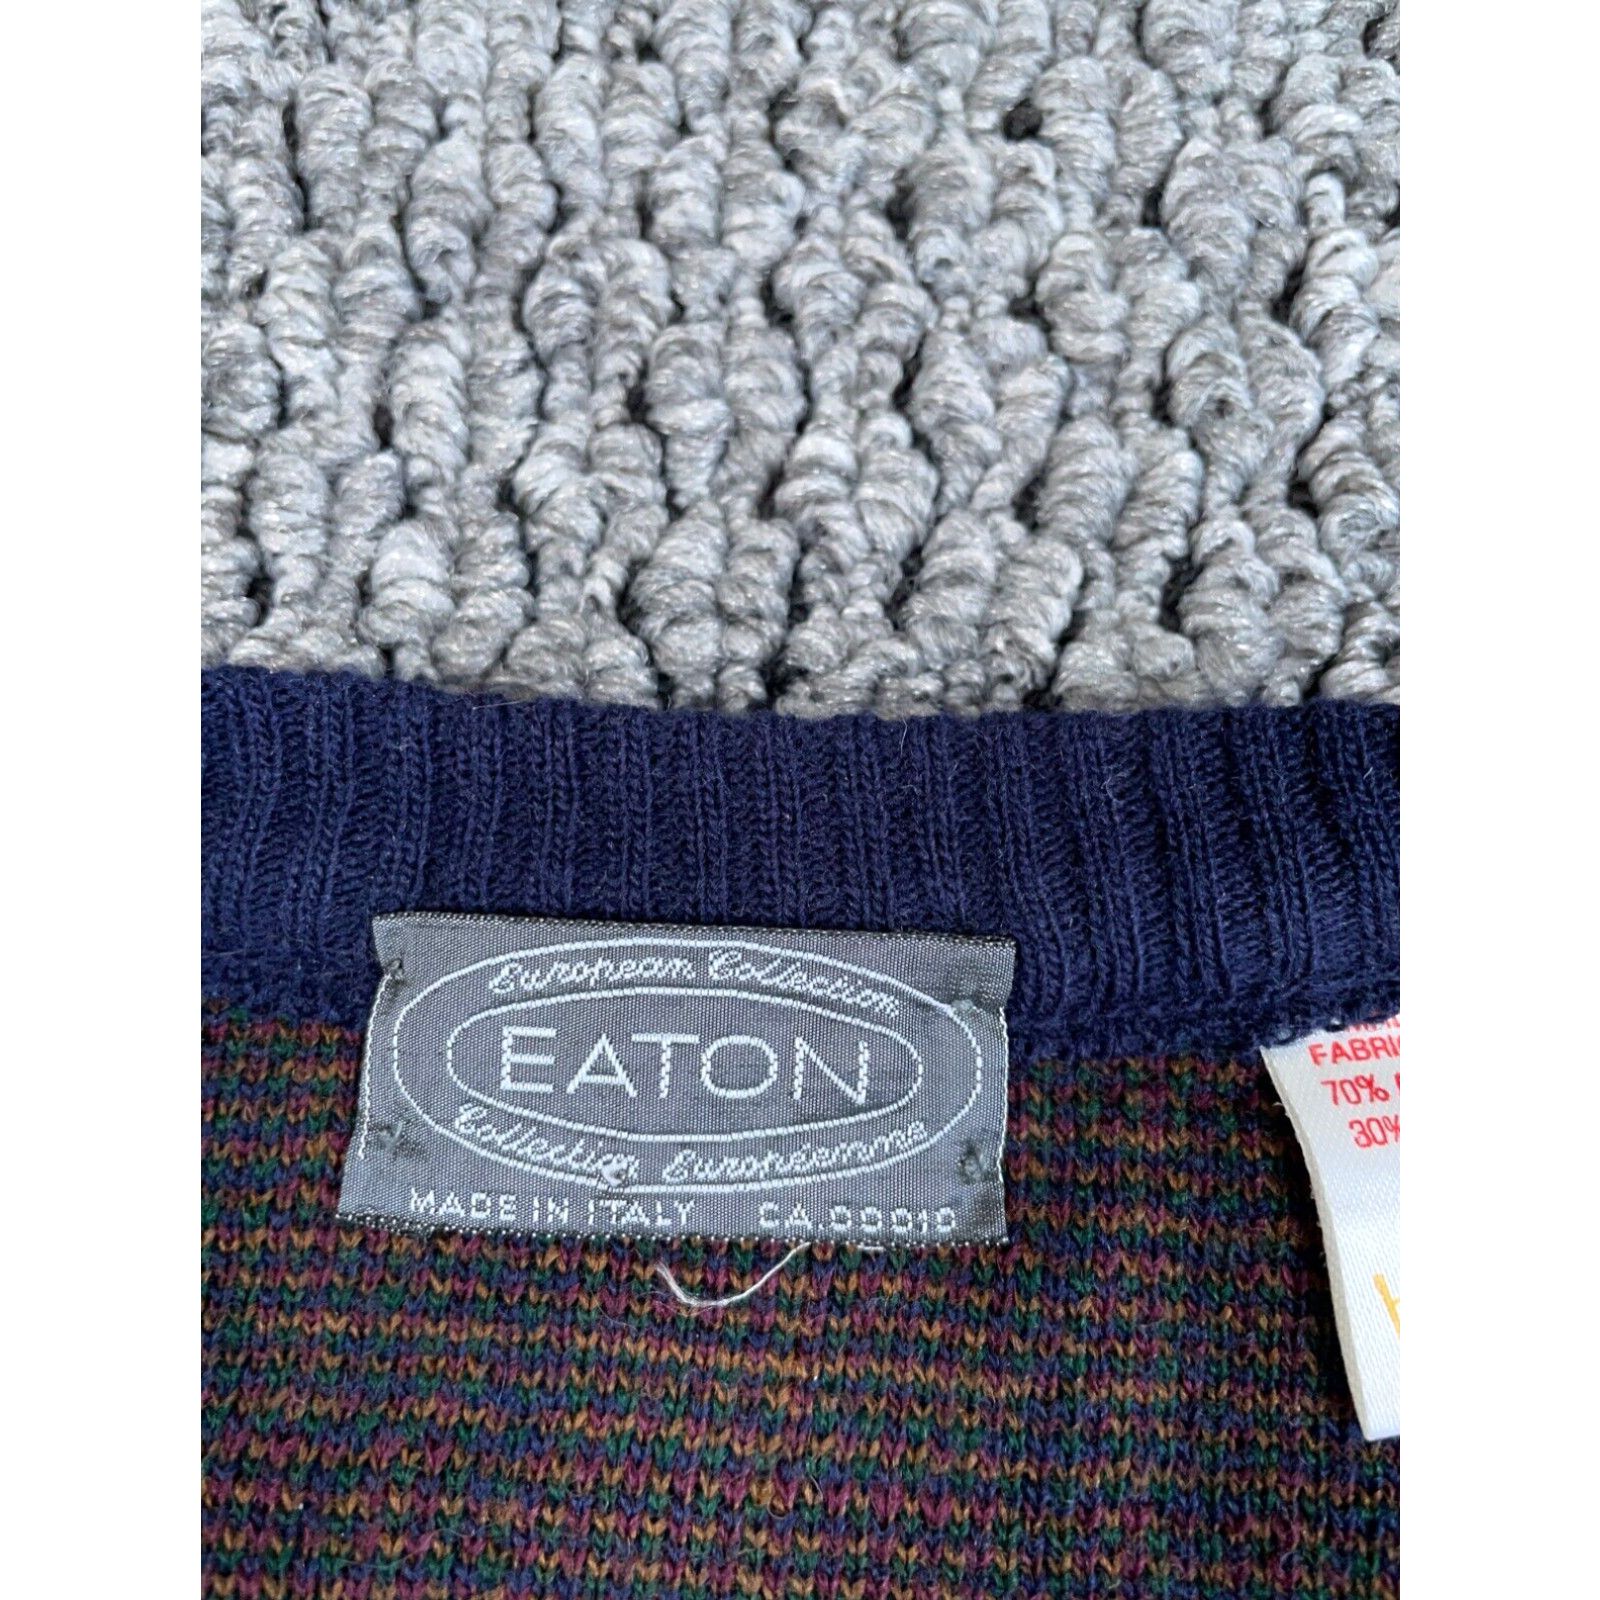 Vintage VTG 80s Eaton Shadow Plaid Paisley Sweater Vest Adult XL Blue Italy Knit Size US XL / EU 56 / 4 - 3 Thumbnail